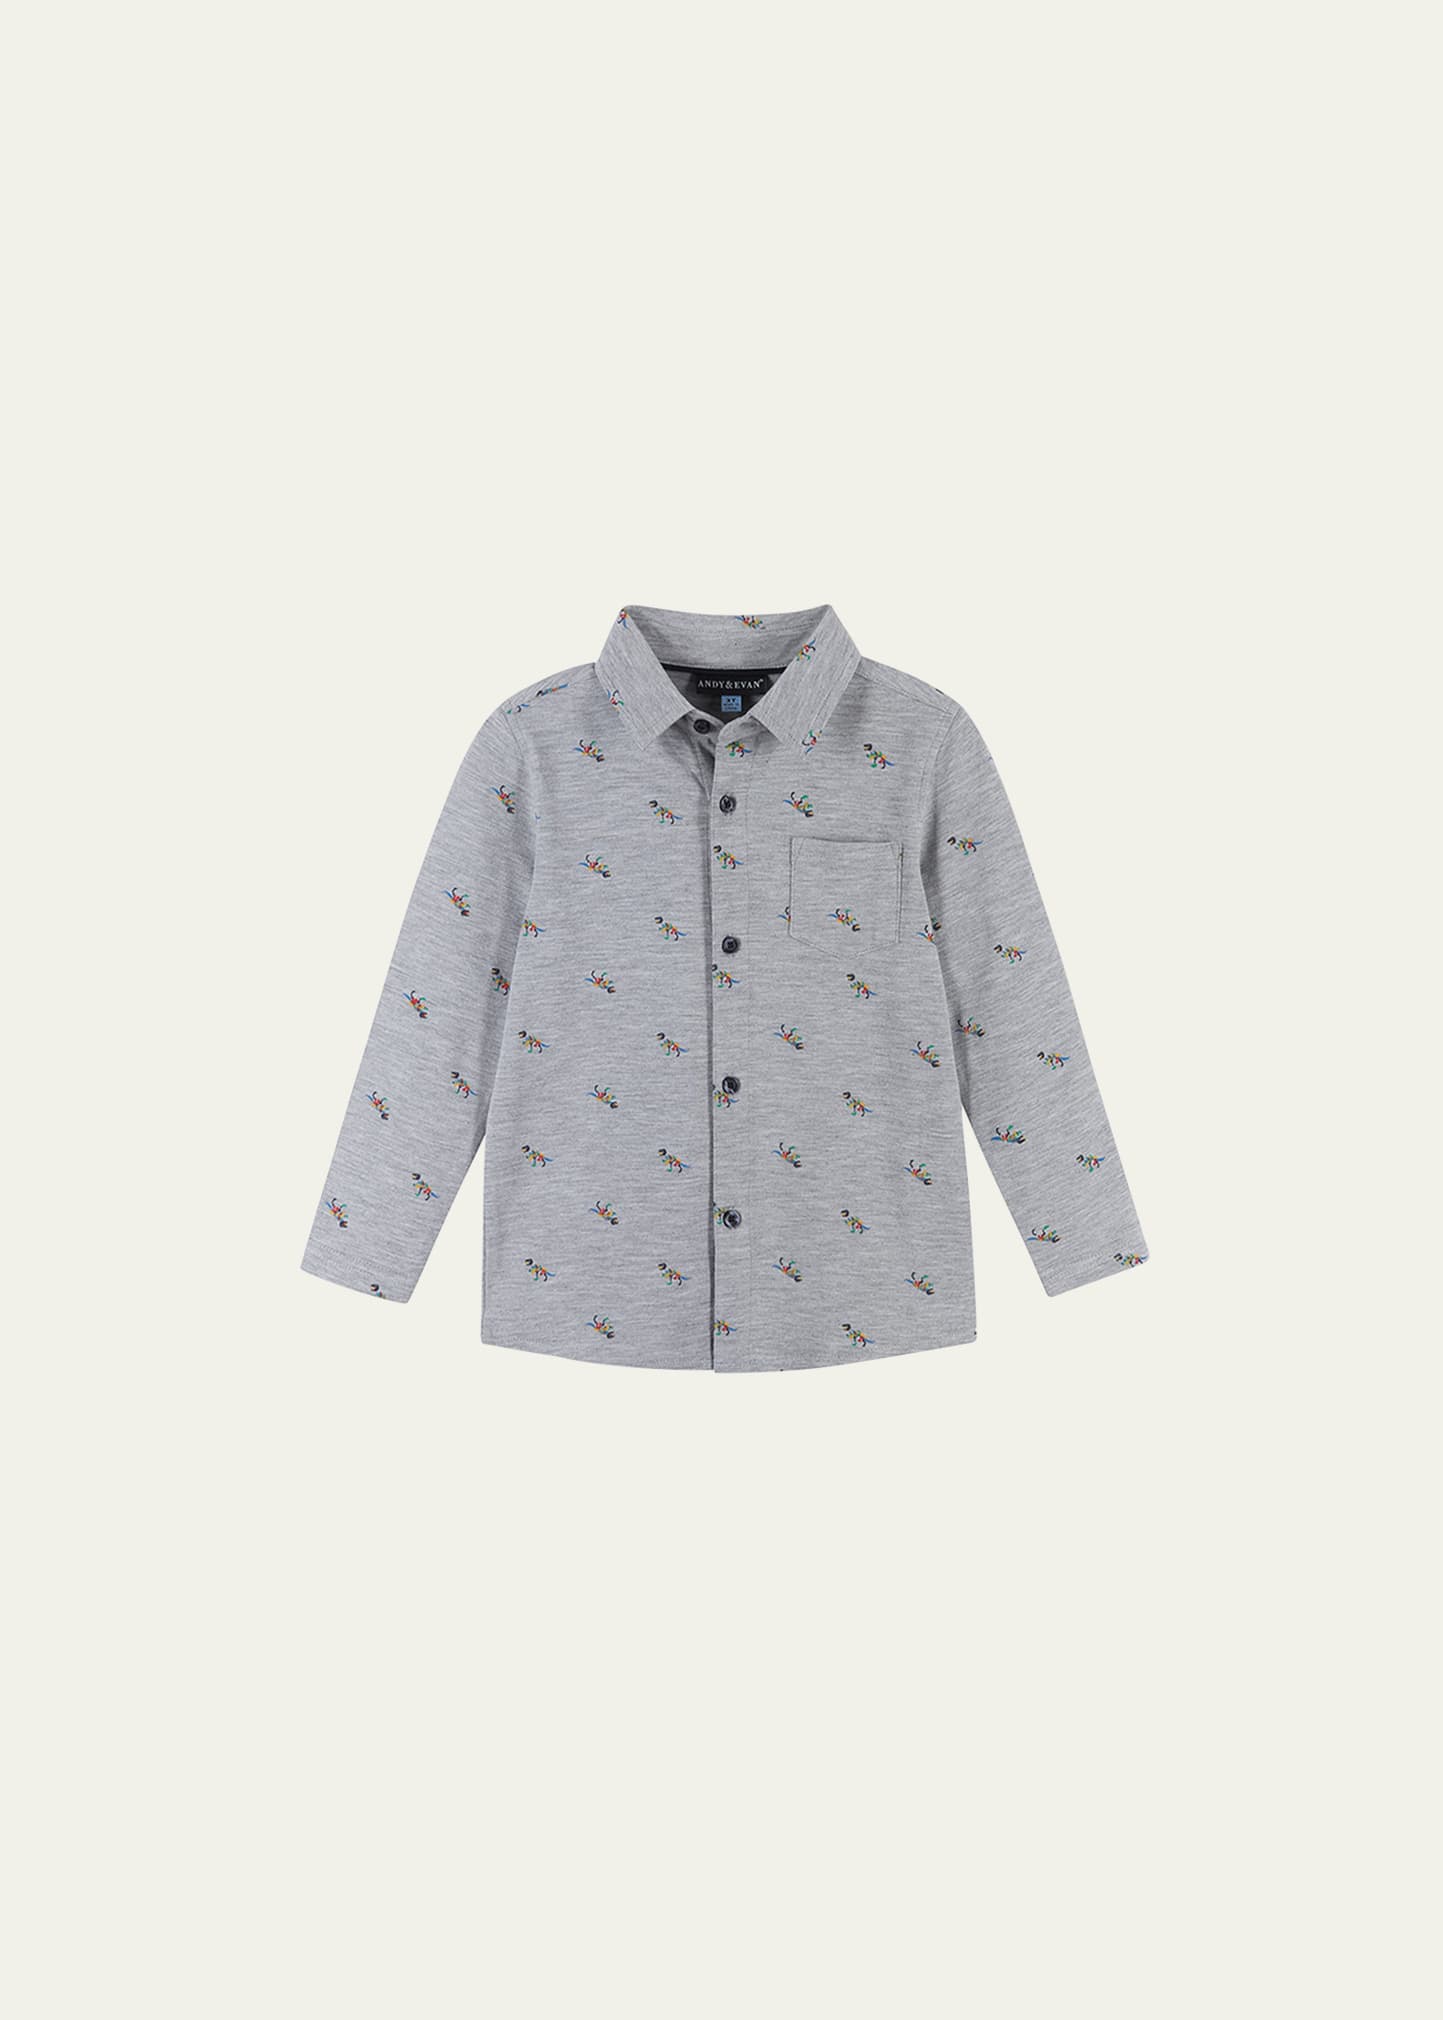 Andy & Evan Boy's Cotton Button-Down Shirt, Size 2-7